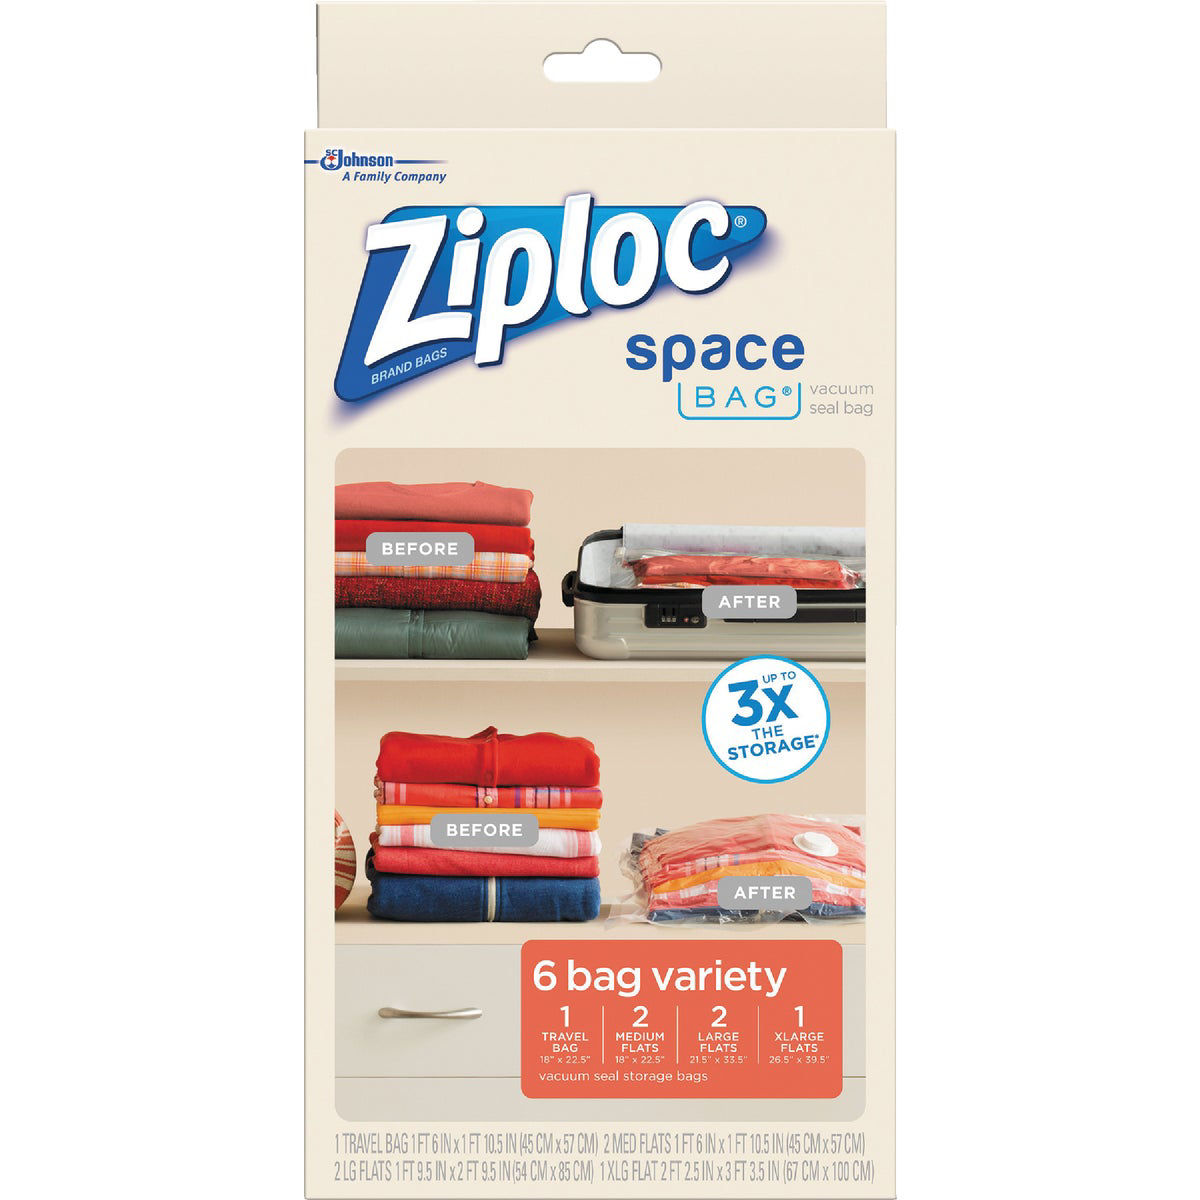 Johnson Ziploc Brand Bags Space Bag Flat Bag Organizer System